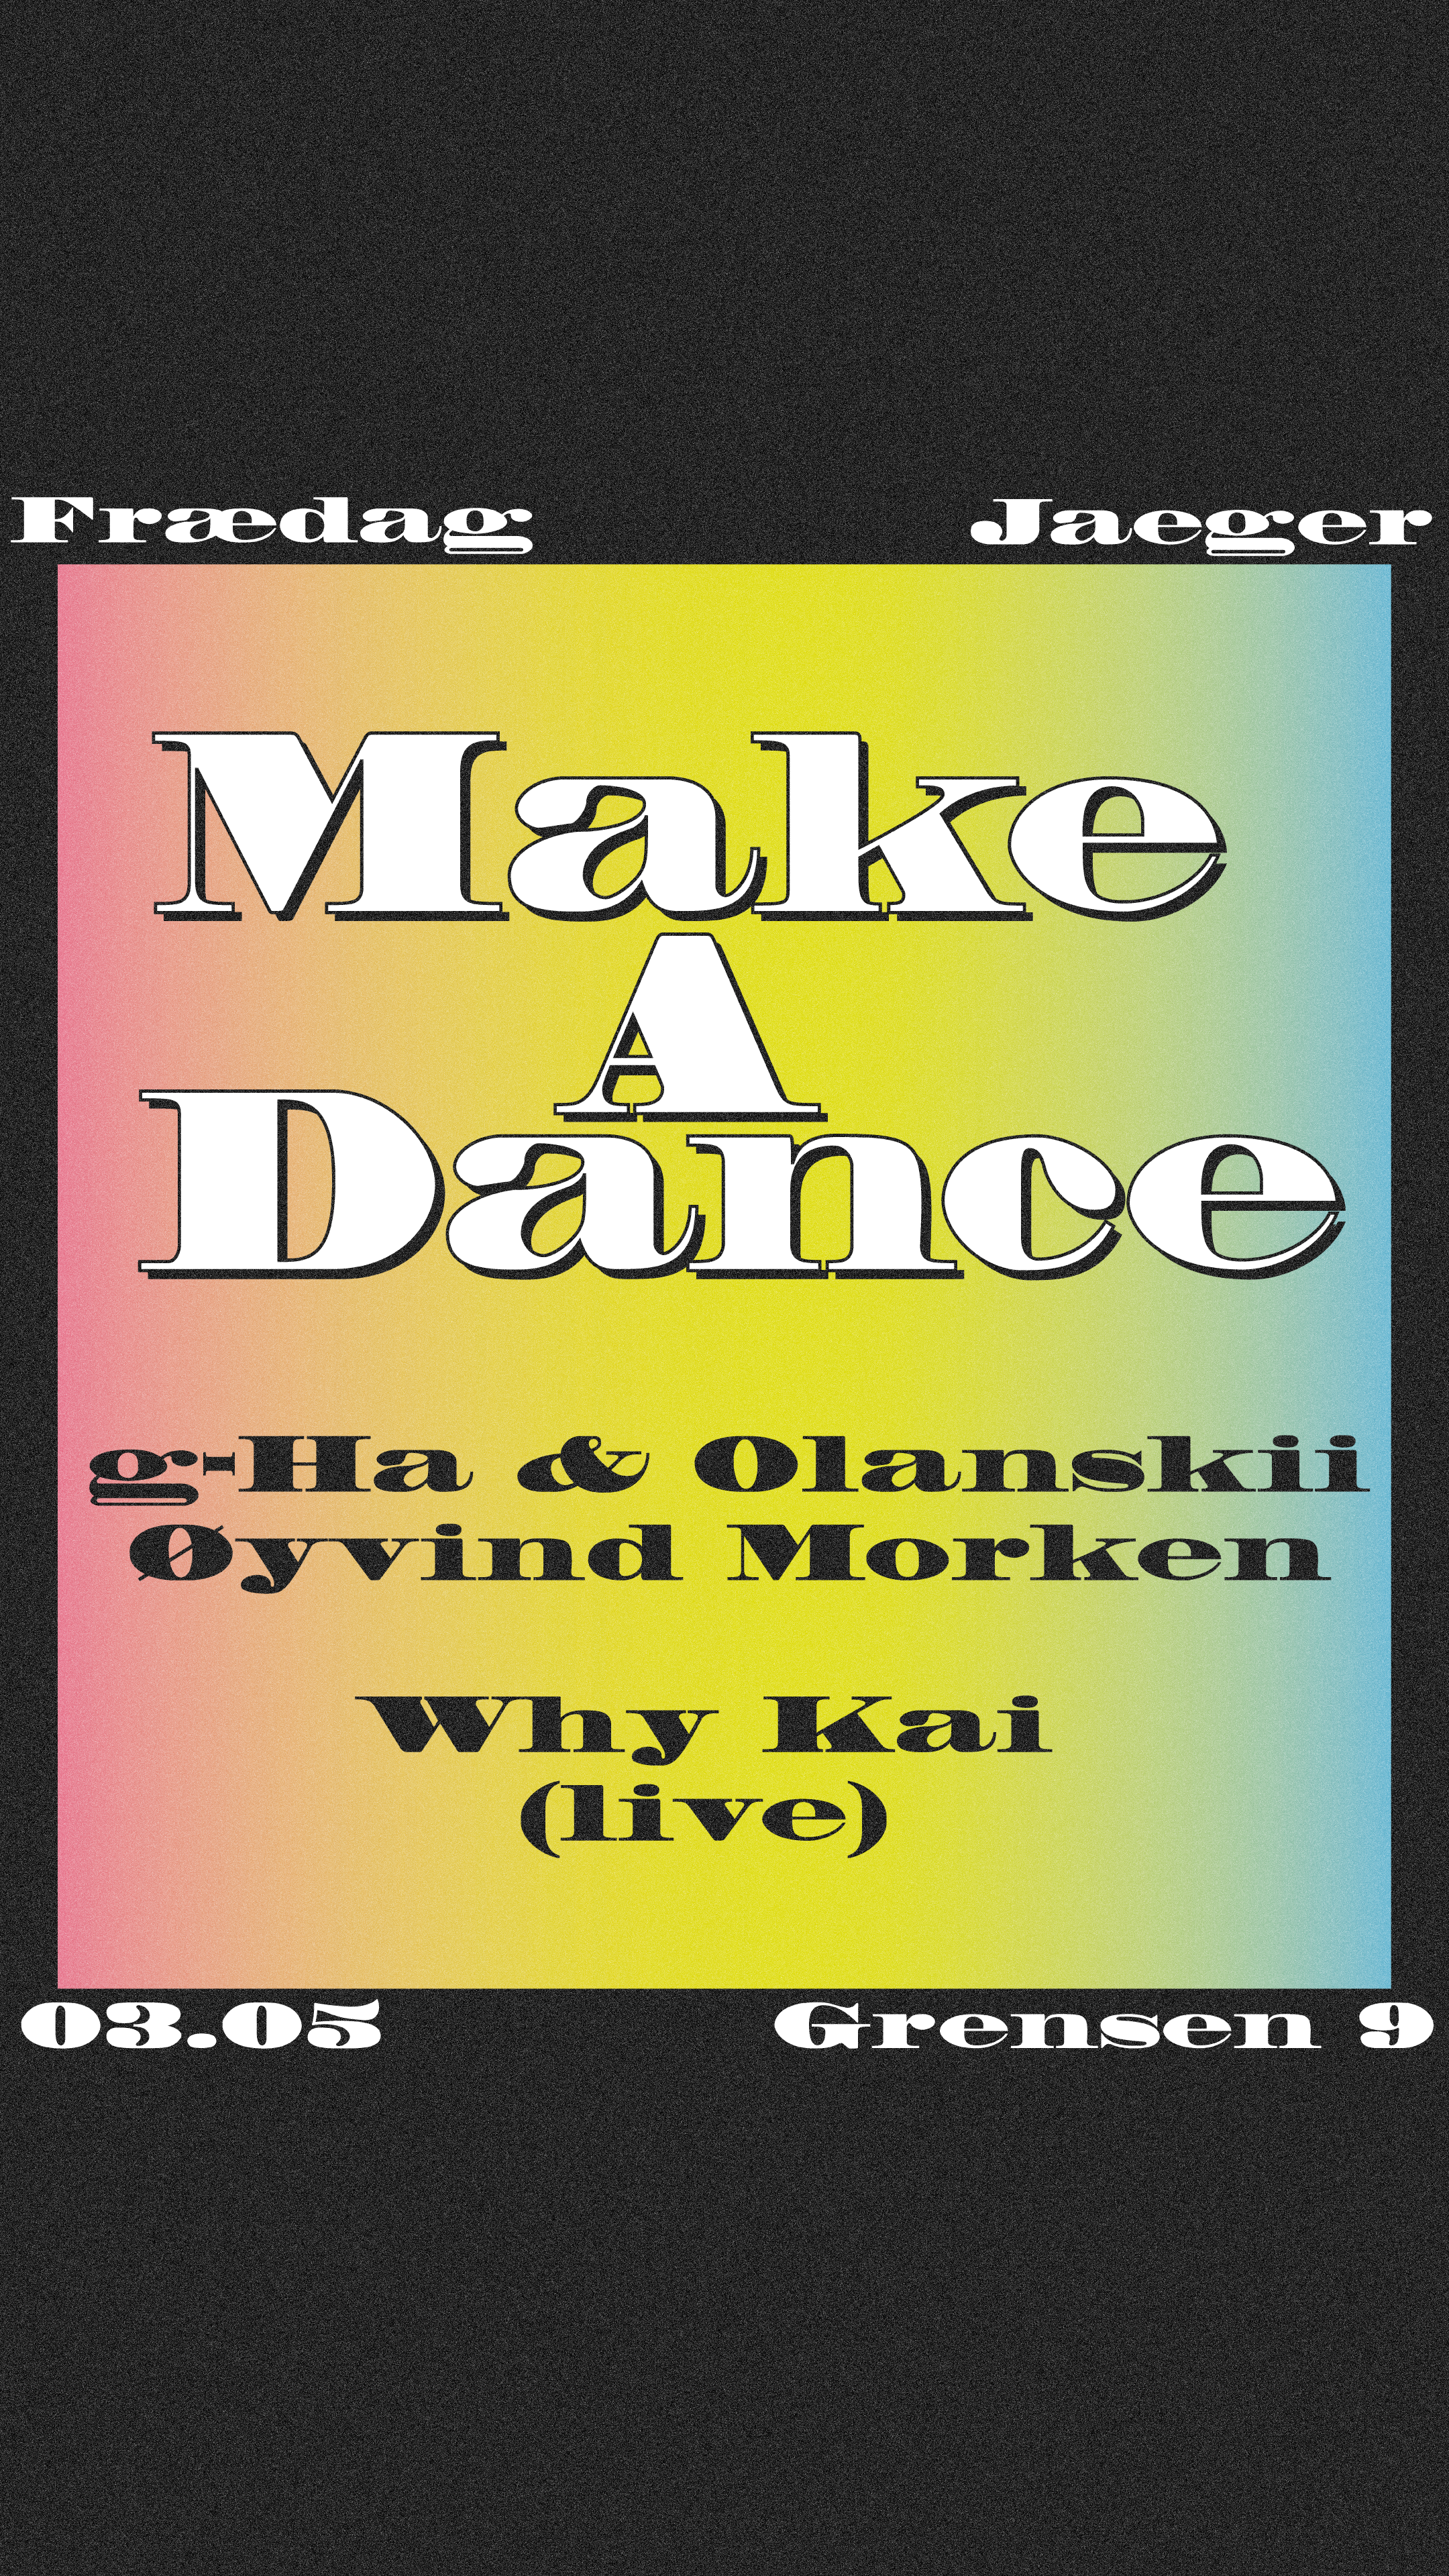 Frædag: Make A Dance + Why Kai (live) - LP Release - Página frontal